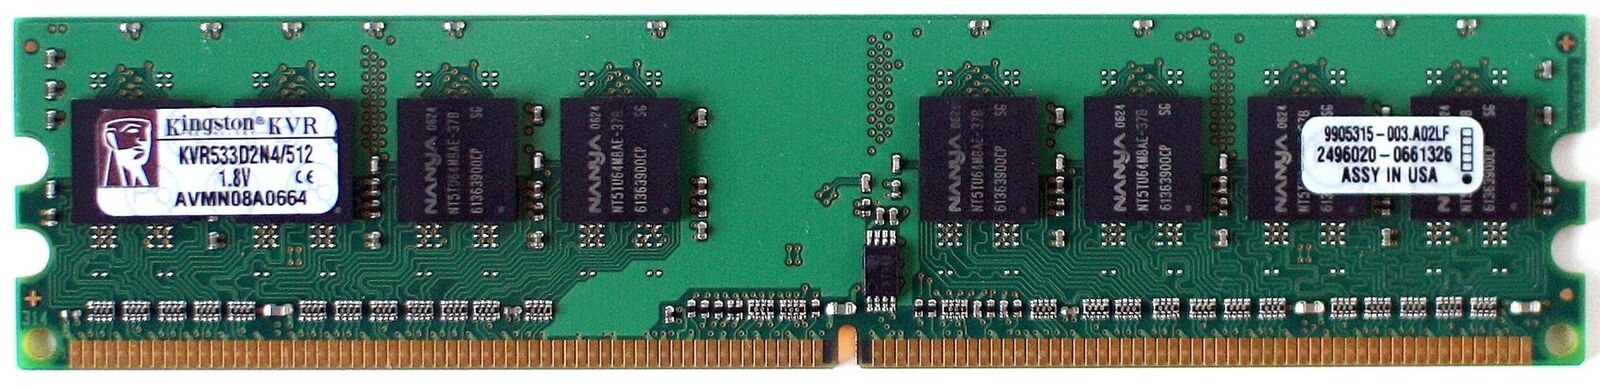 MEMORY DDR 512MB 533MHz, KVR533D2N4/512, 9905315-003.A02LF